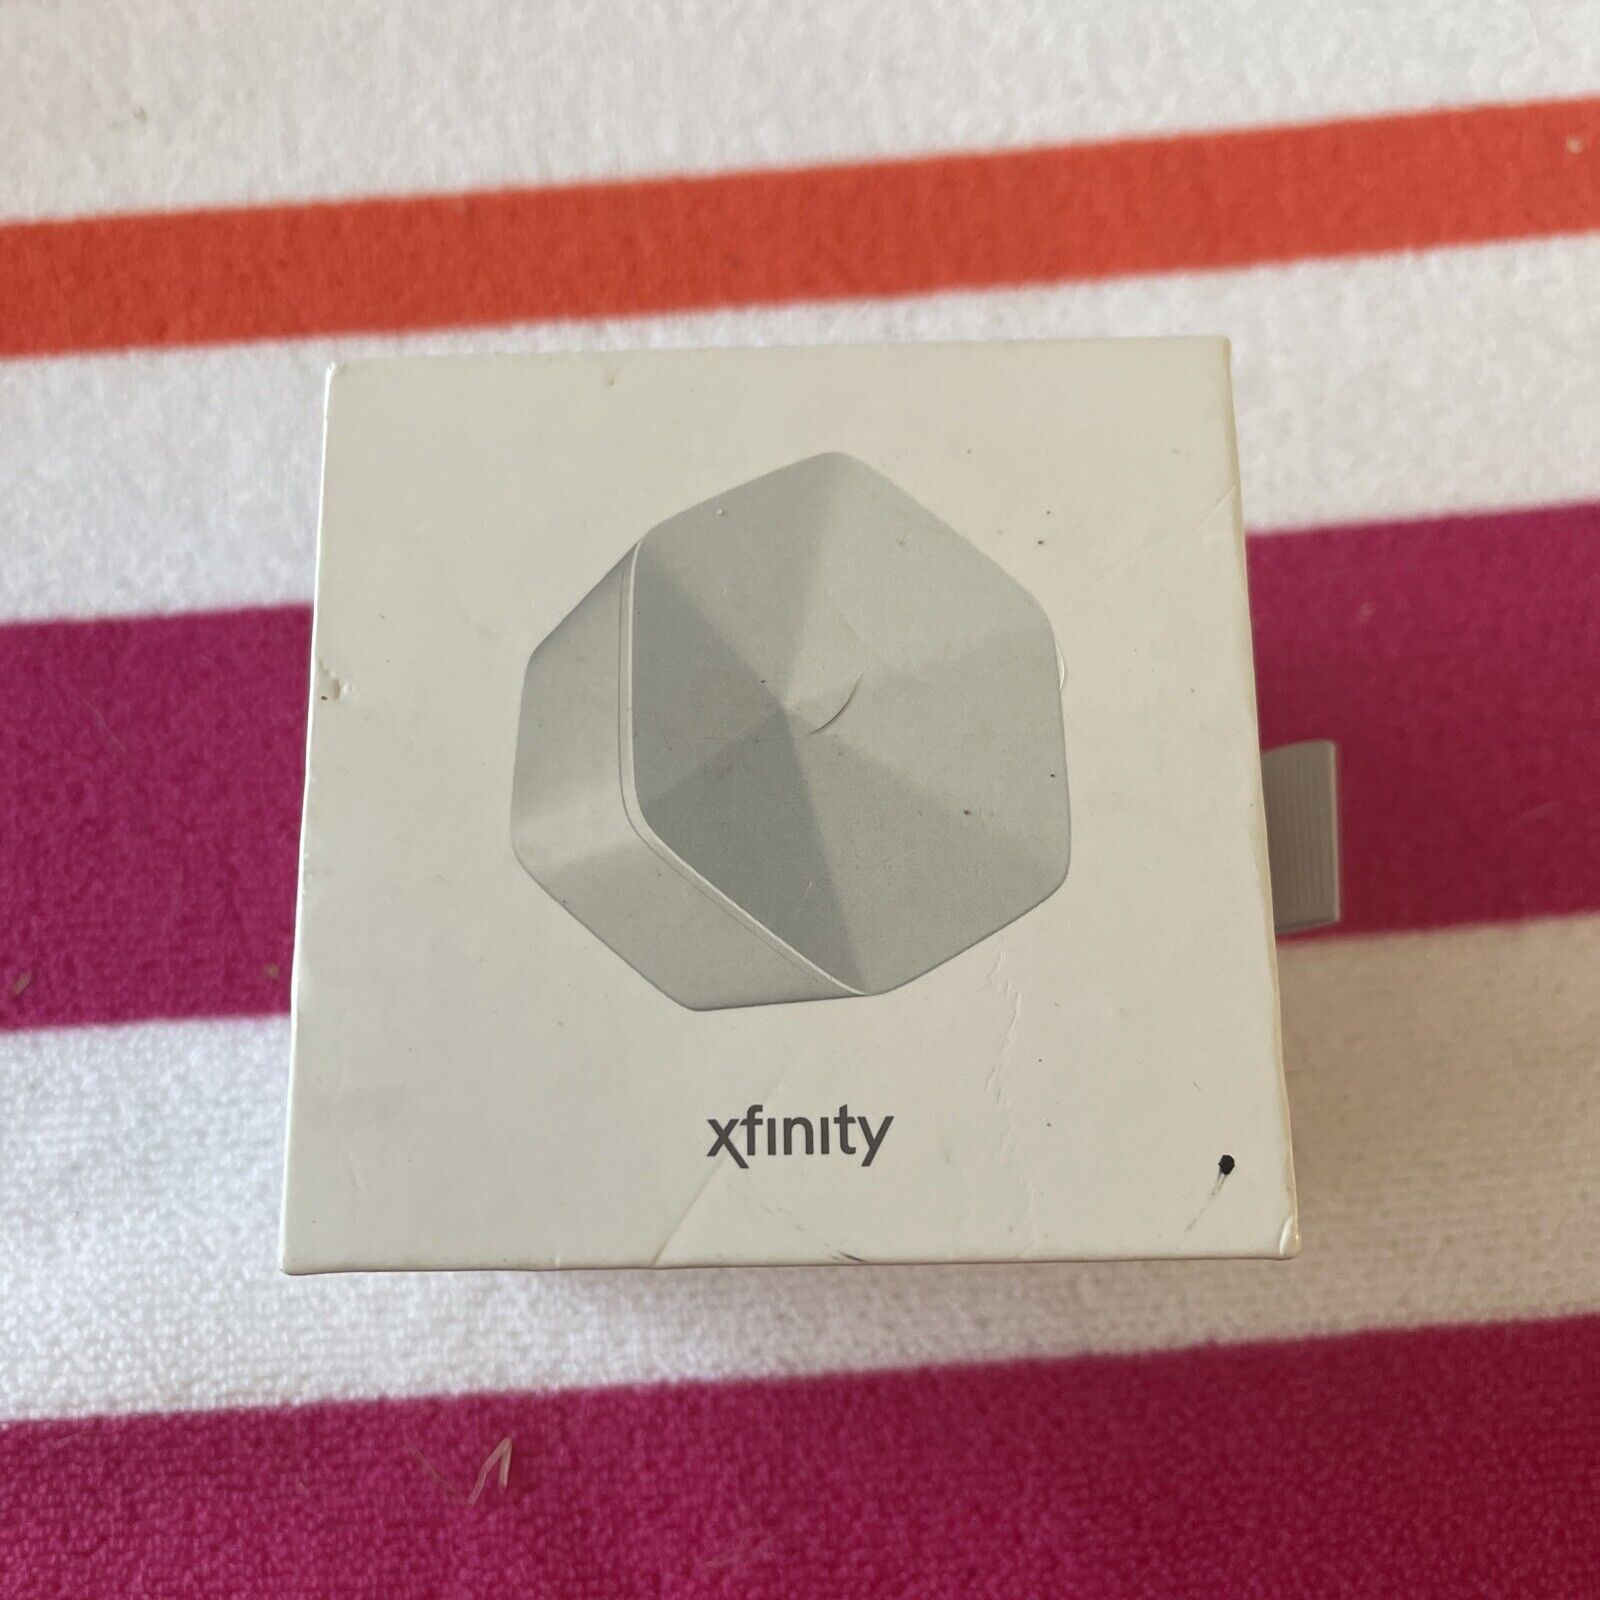 Xfinity XFI Pods Wifi Network Range Extender - White, 1 New In Box)